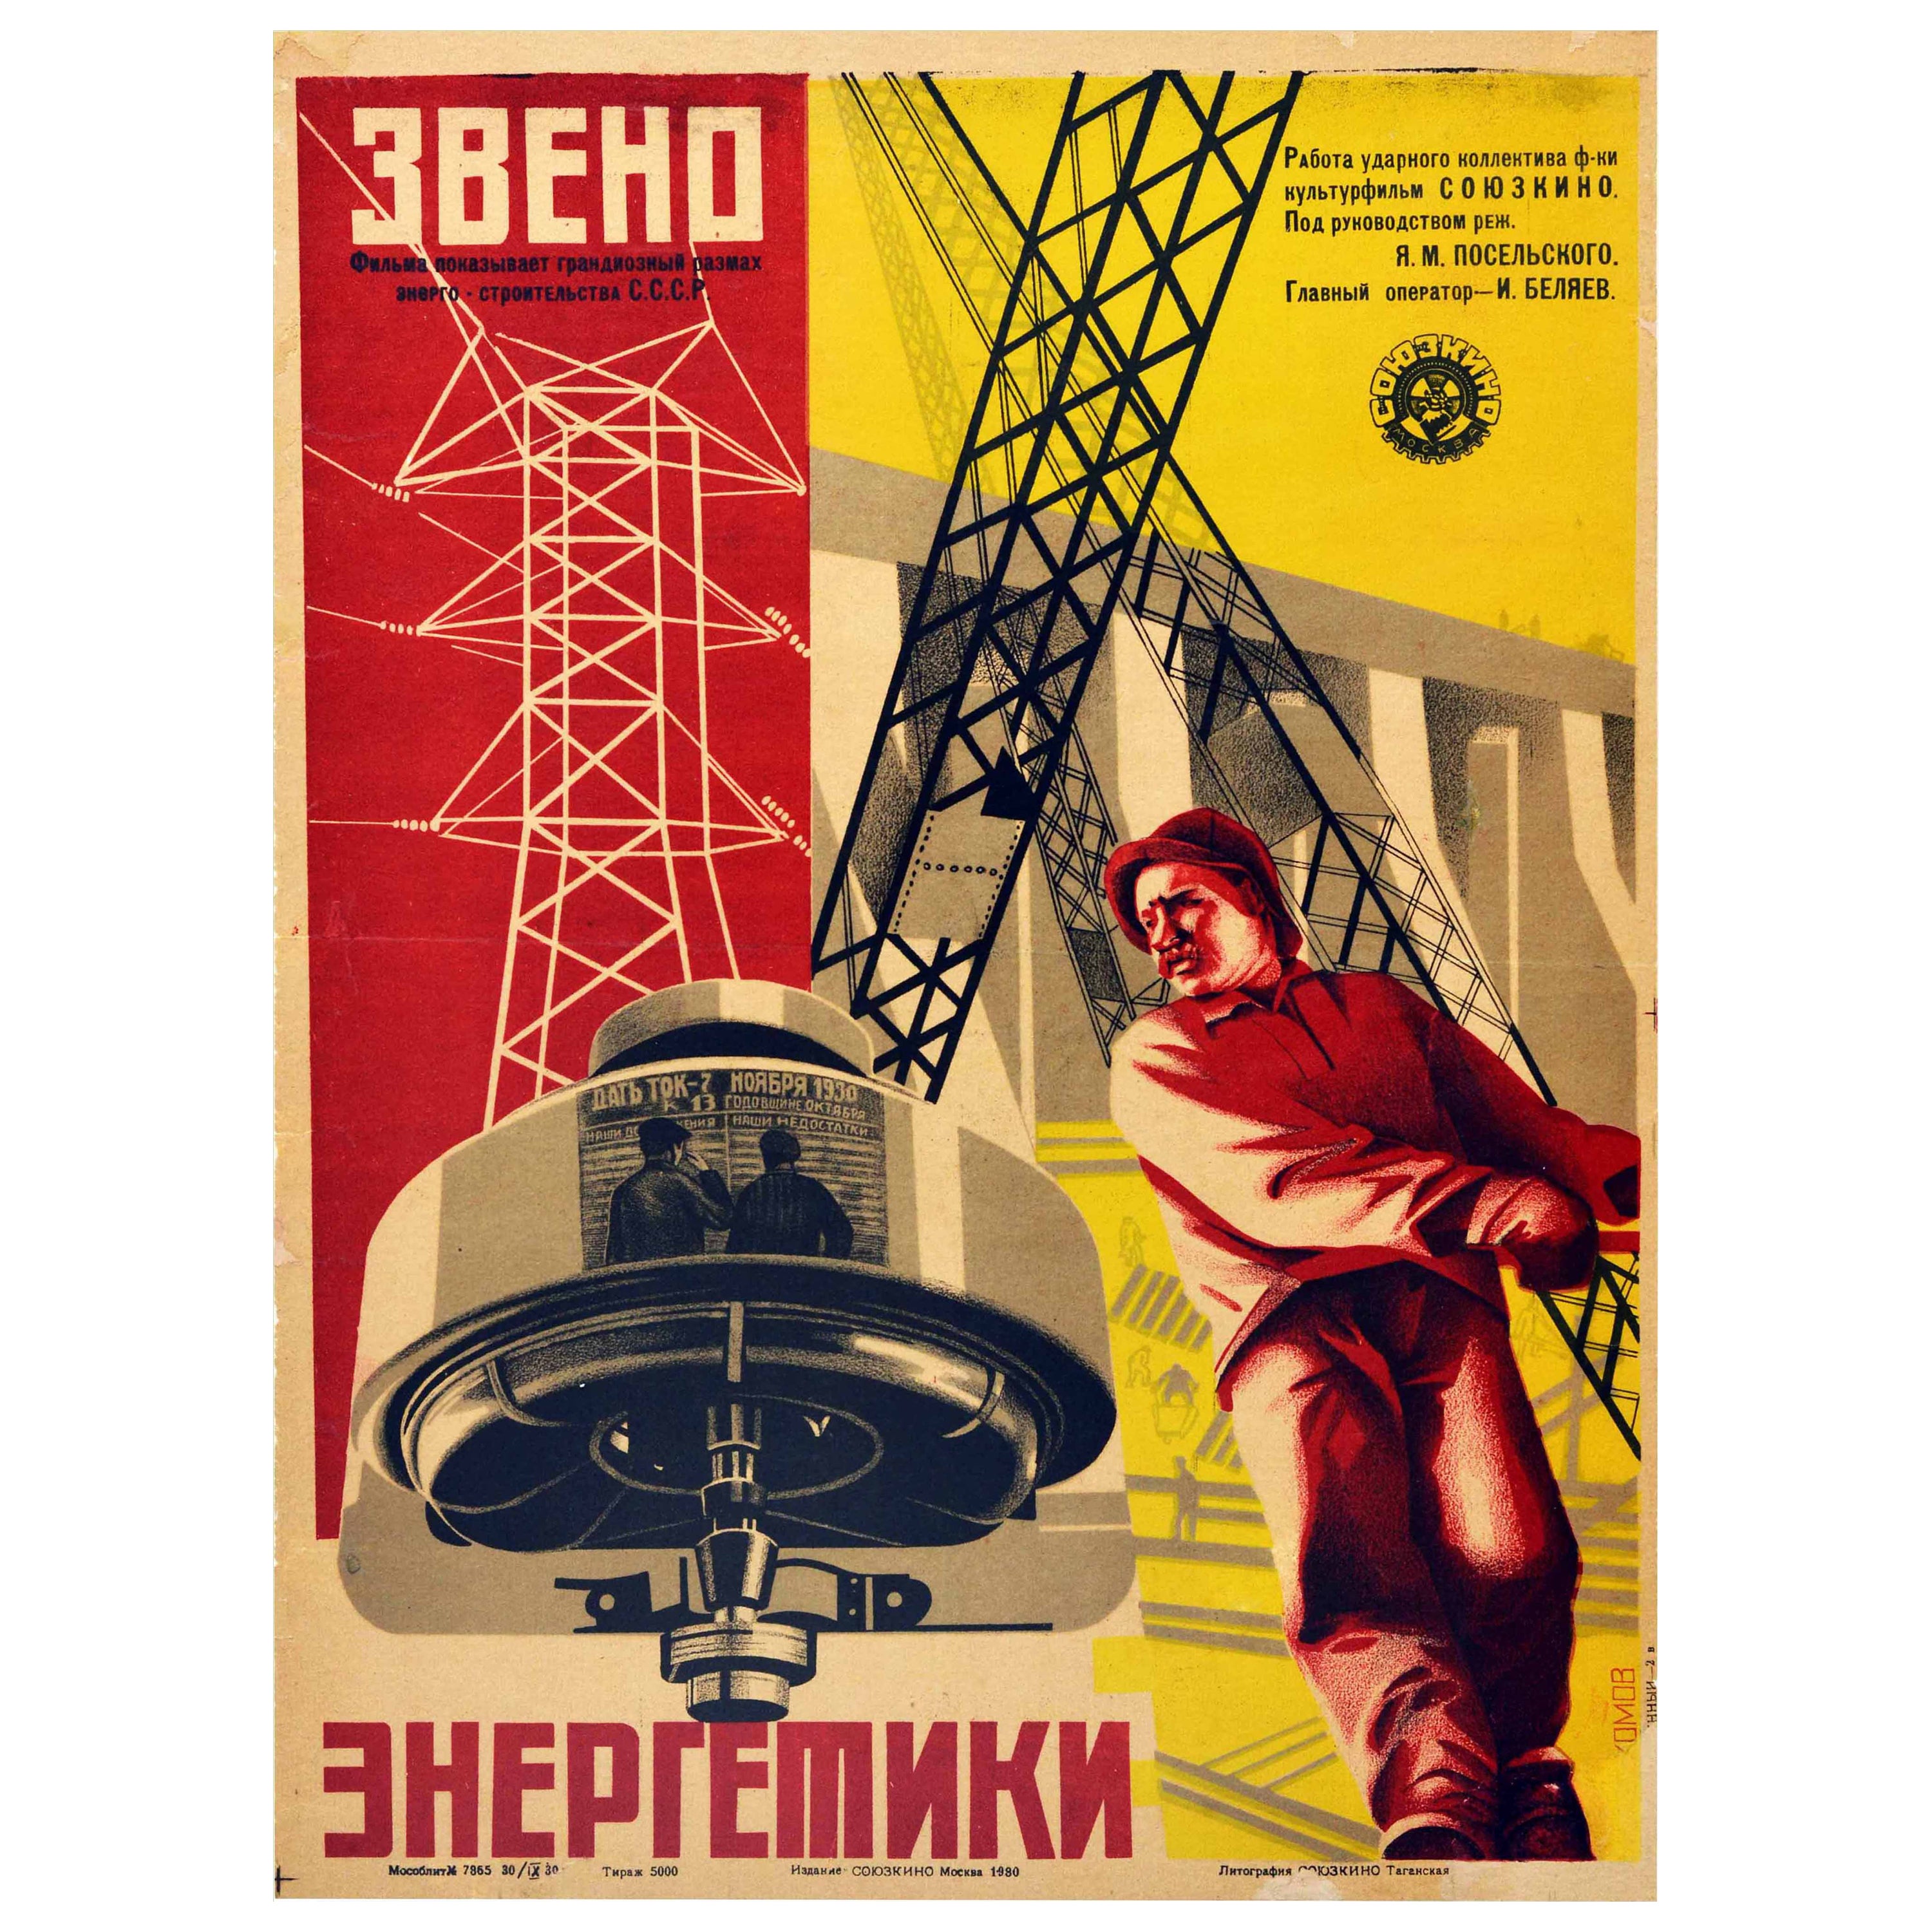 Original Vintage Soviet Documentary Film Poster Energy Link Construction Goals